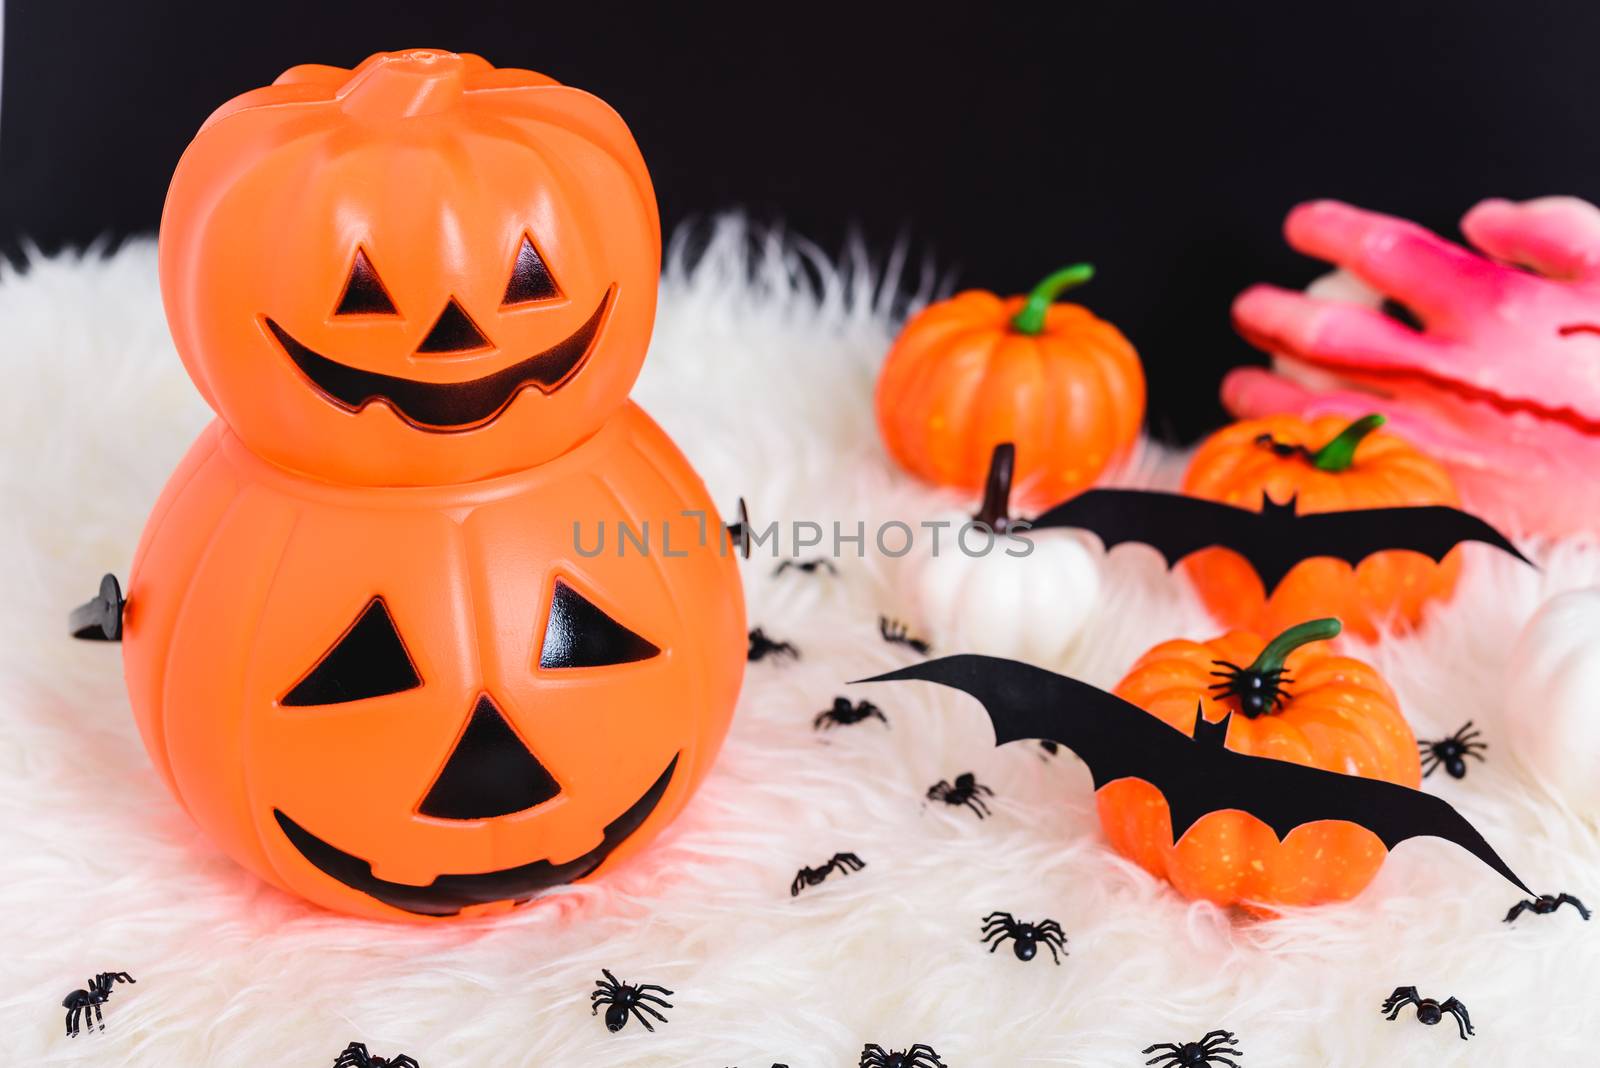 Pumpkin Jack creepy, spider and bat in photo, Halloween day conc by Sorapop